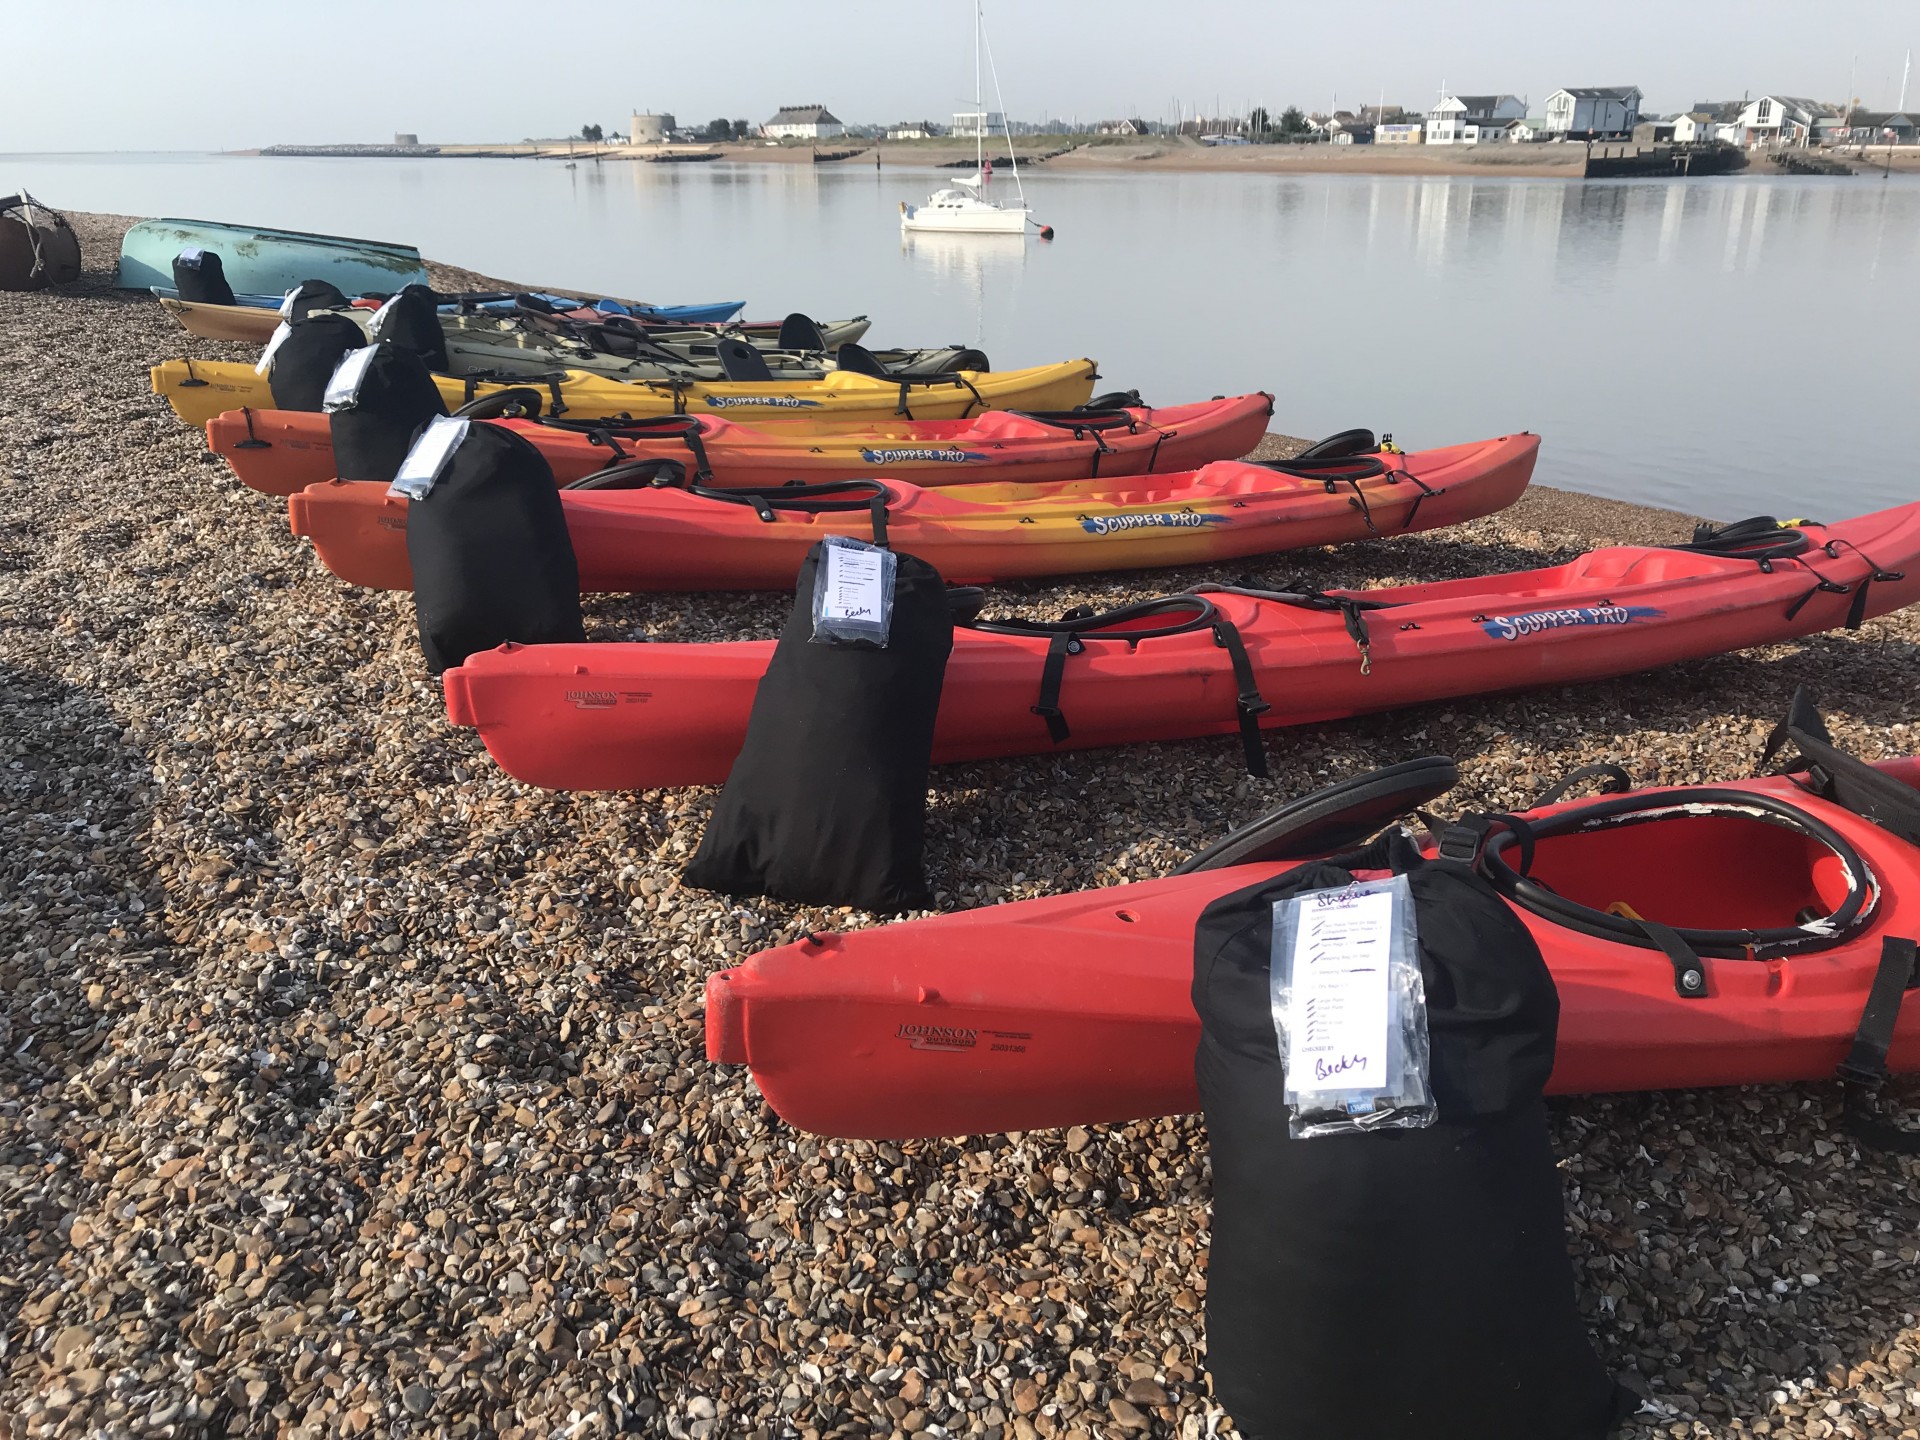 Kayaks neatly lined on a shingle beach in Suffolk.